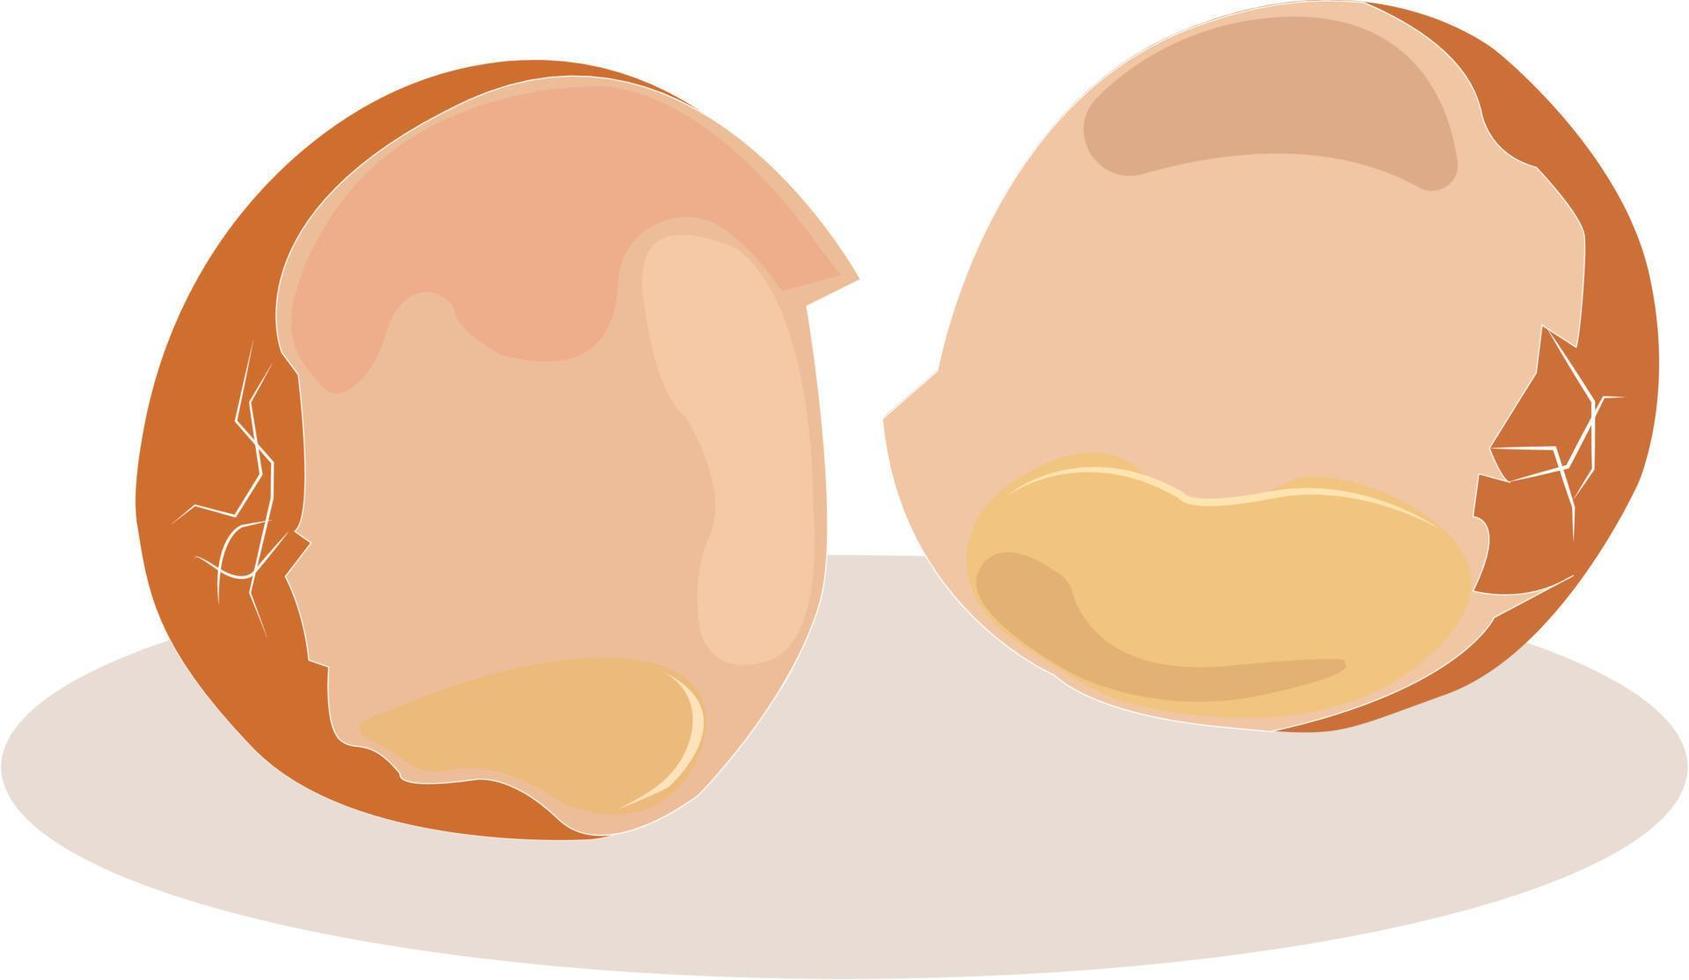 cáscara de huevo, ilustración, vector sobre fondo blanco.